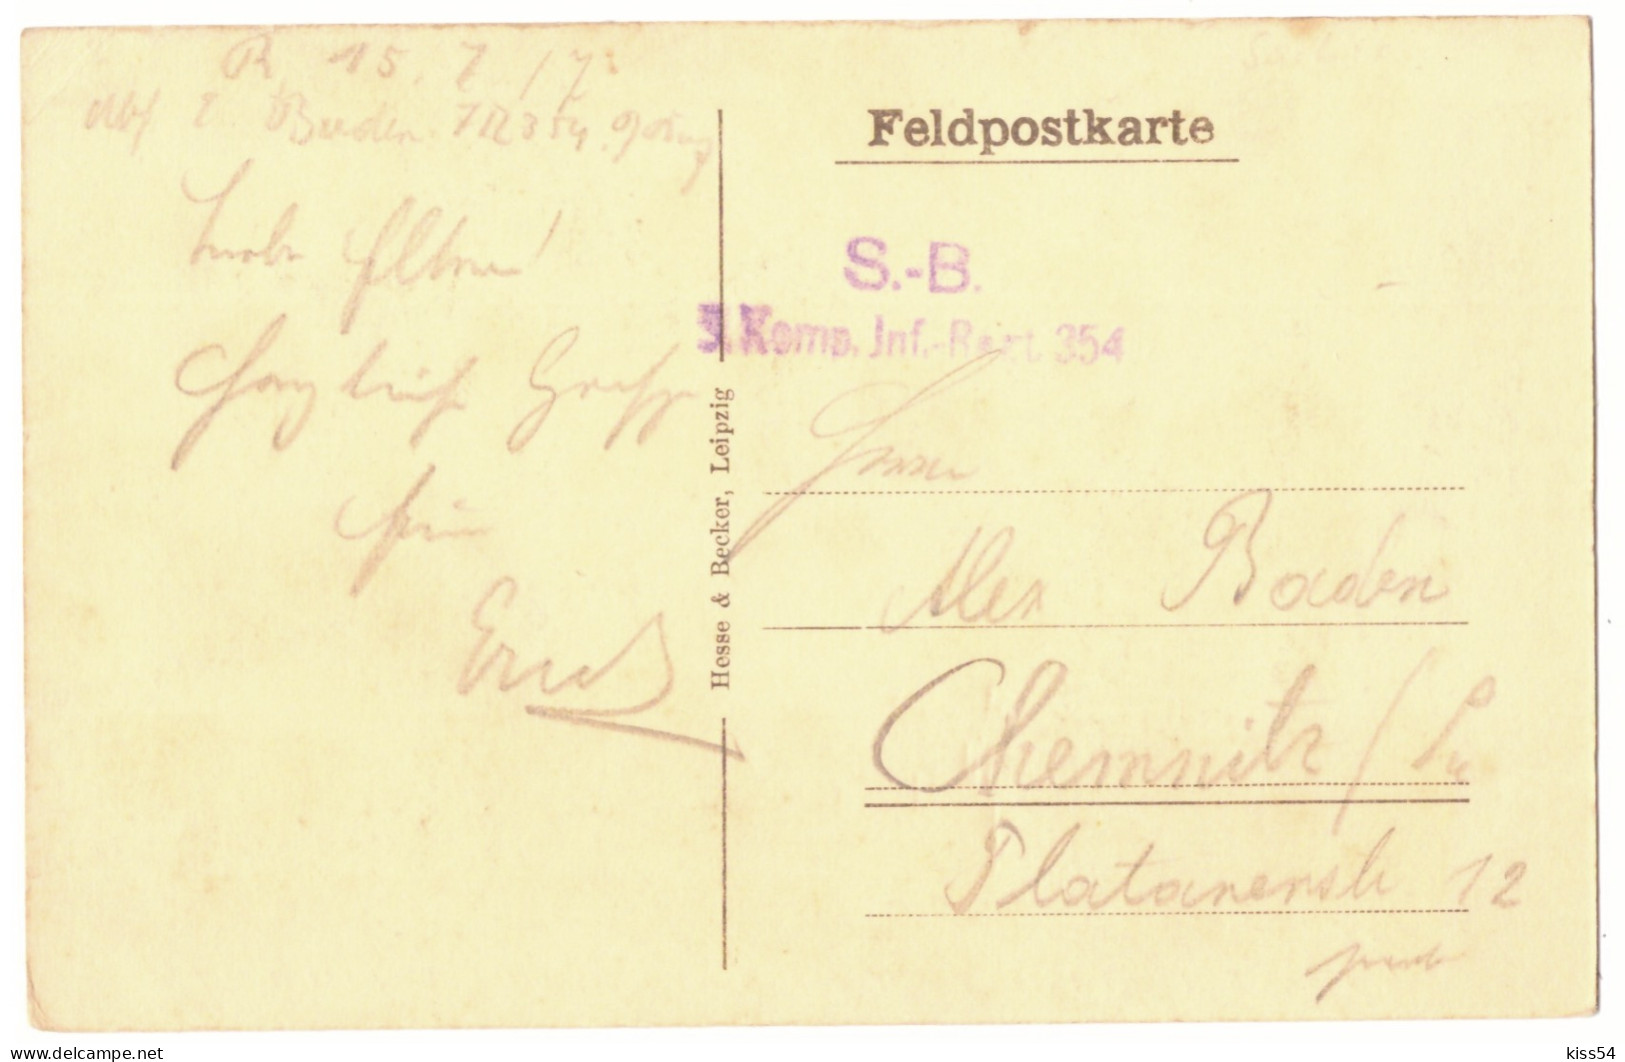 RO 81 - 18381 FOCSANI, German Army On The Street, Romania - Old Postcard, CENSOR - Used - 1917 - Roumanie